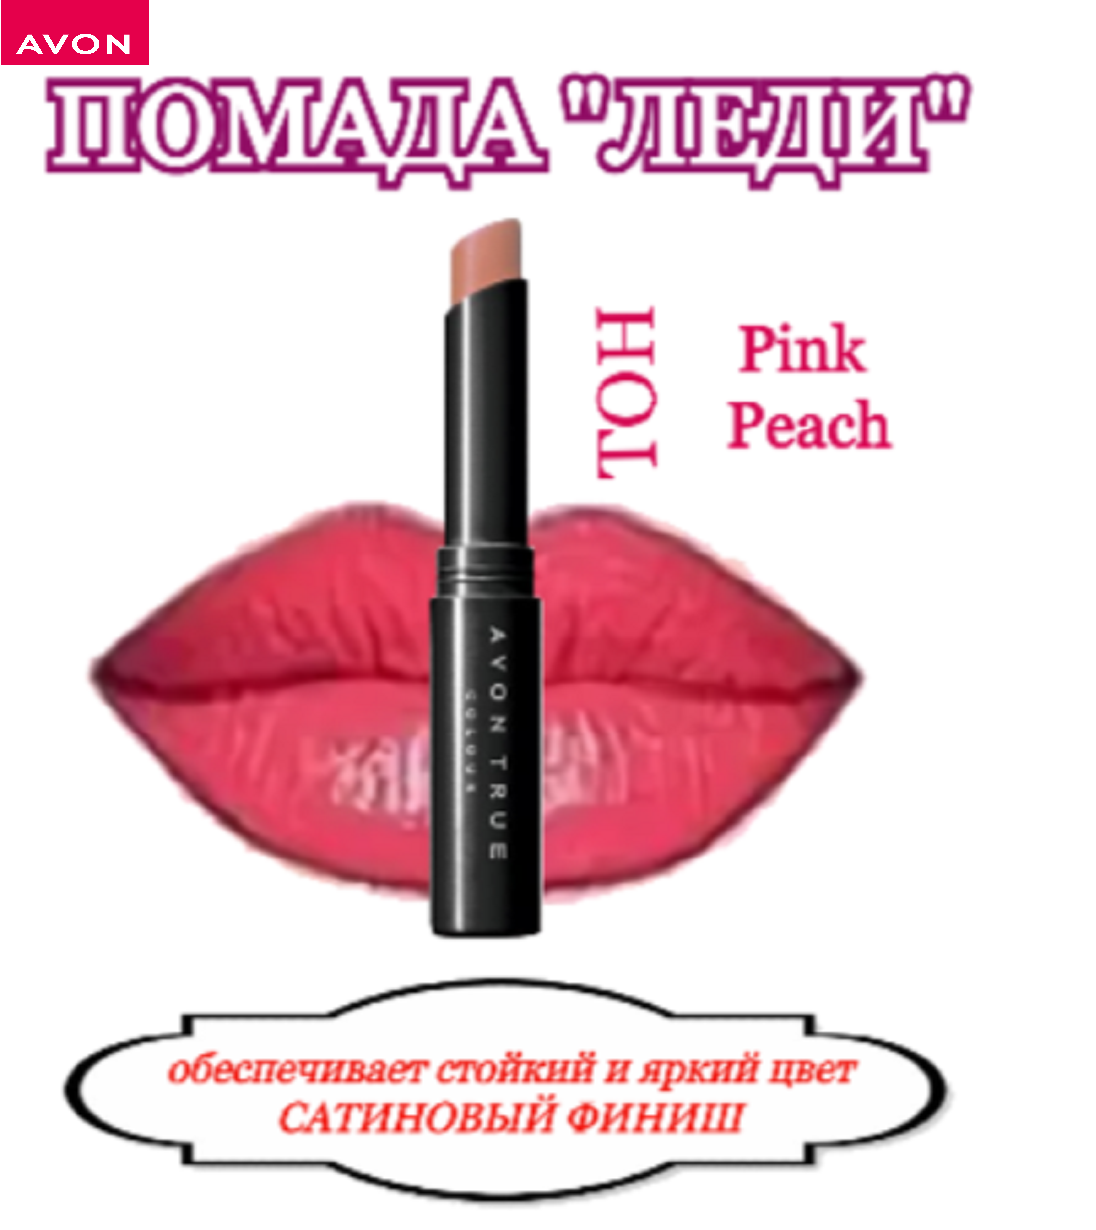 Avon Губная помада "Леди" Розовый персик/Pink Peach -Эйвон